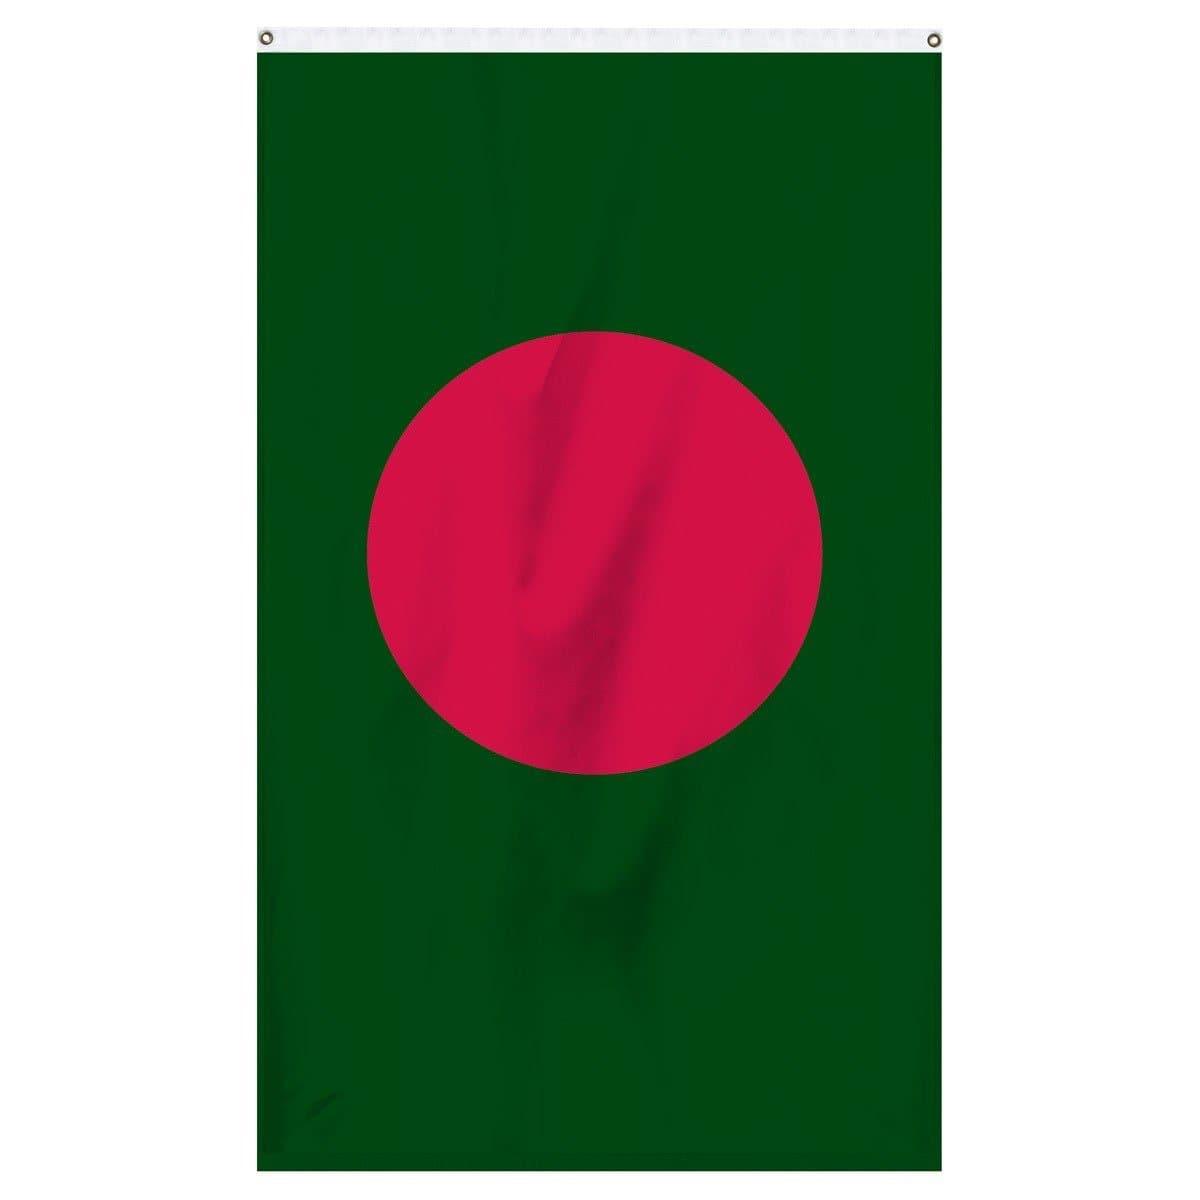 Bangladesh international flag for sale